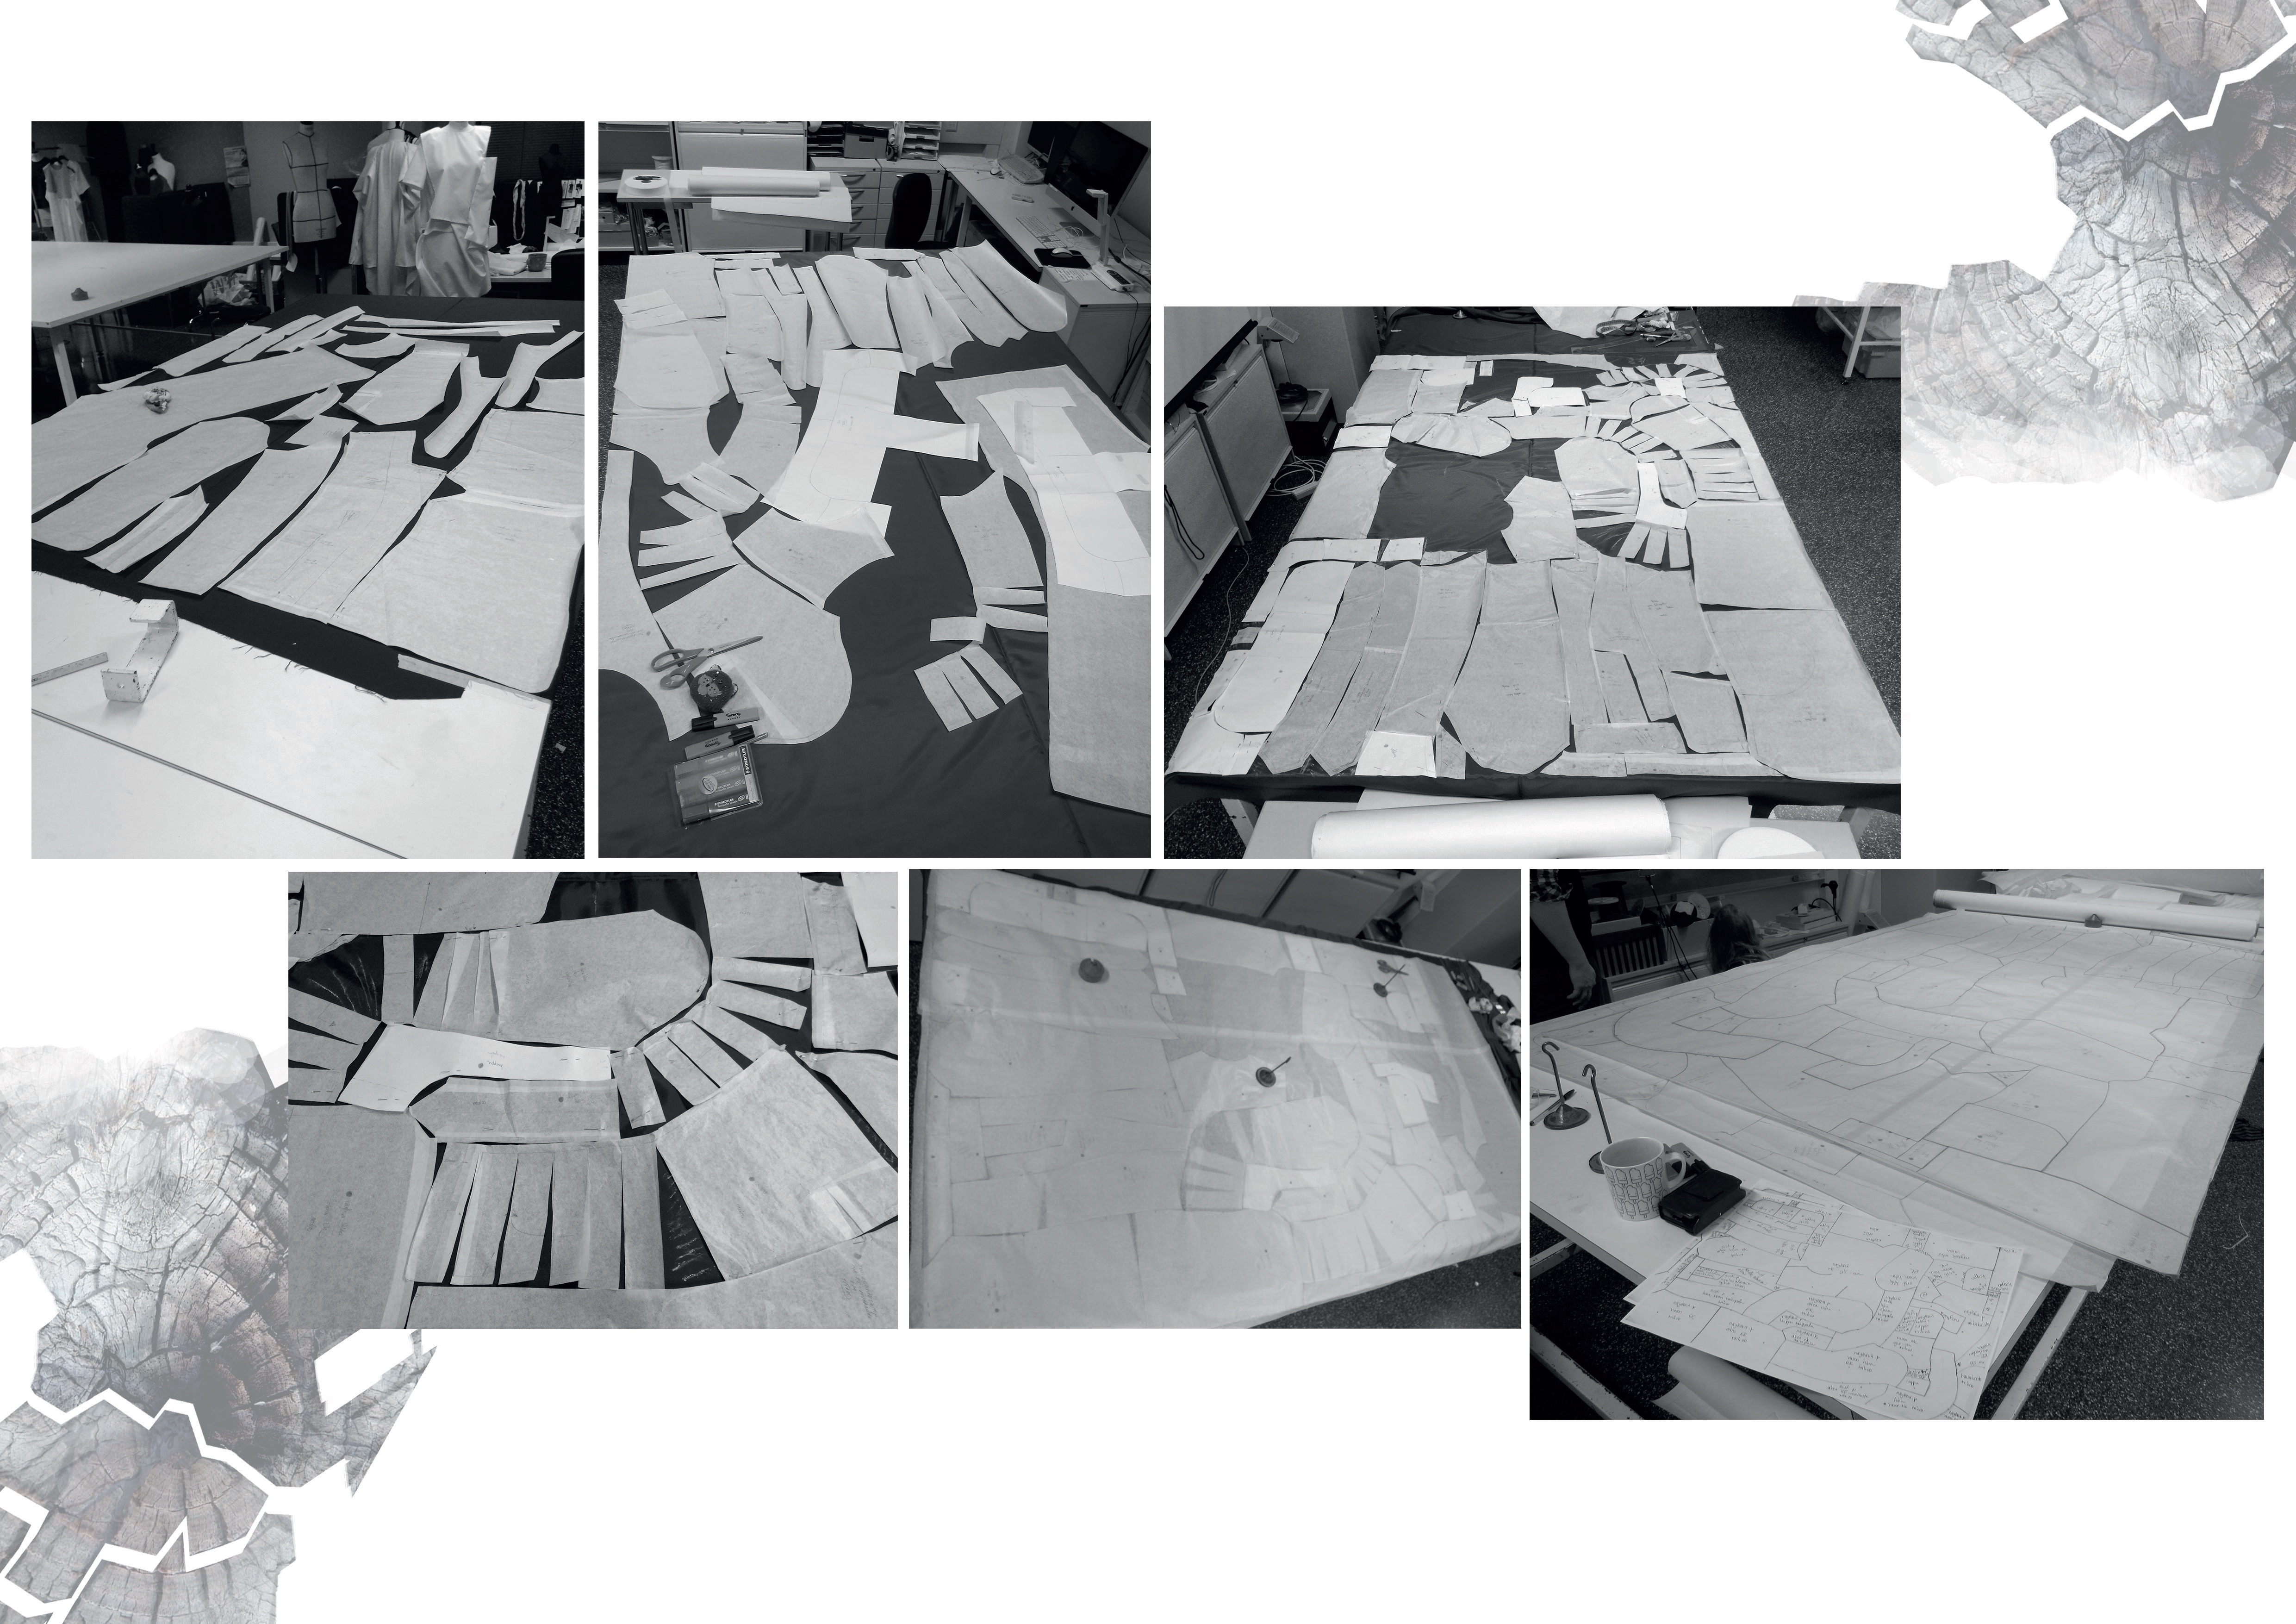 Design process by Jennifer Backlund & Anni Tamminen, Lahti University of Applied Sciences (2014). Source: Timo Rissanen 